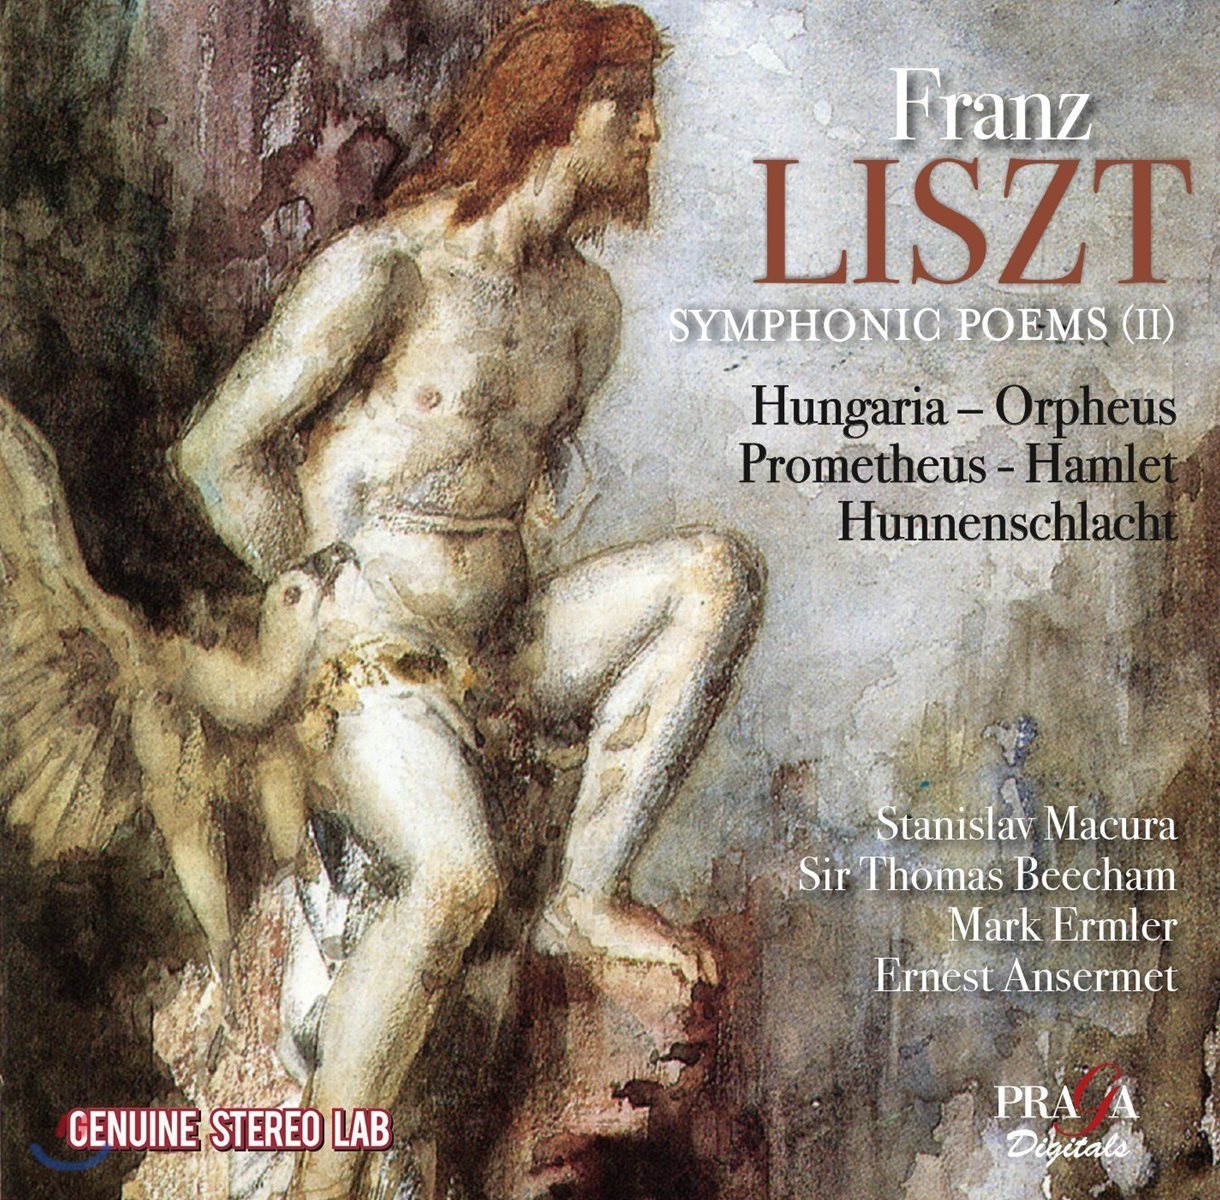 Ernest Ansermet / Mark Ermler 리스트: 교향시 2집 (Liszt: Symphonic Poems II - Orpheus, Prometheus, Hunnenschlacht)